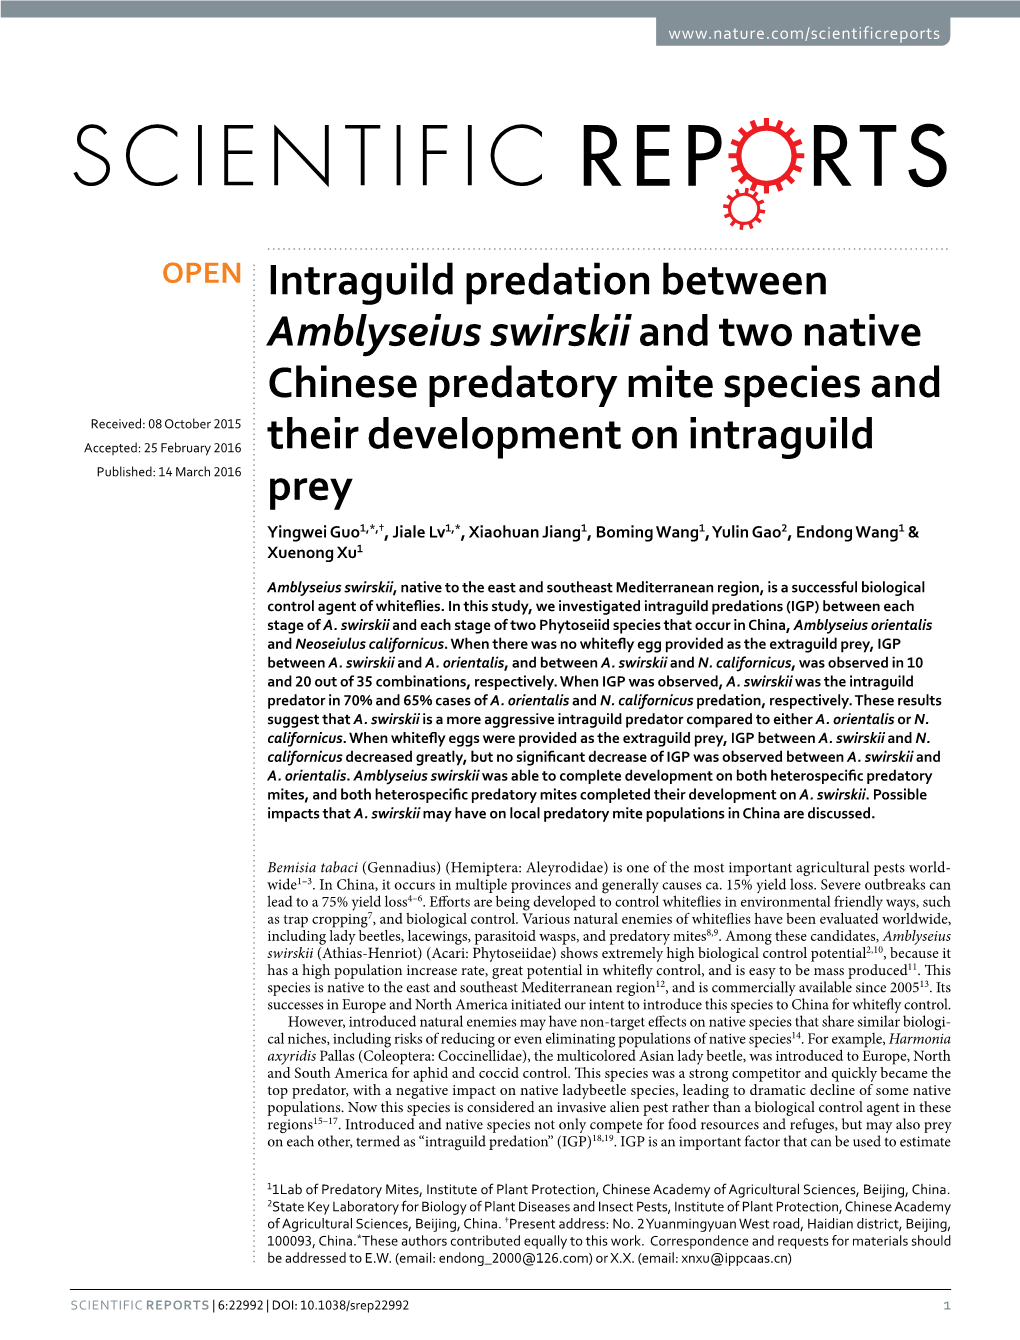 Intraguild Predation Between Amblyseius Swirskii and Two Native Chinese Predatory Mite Species and Their Development on Intraguild Prey